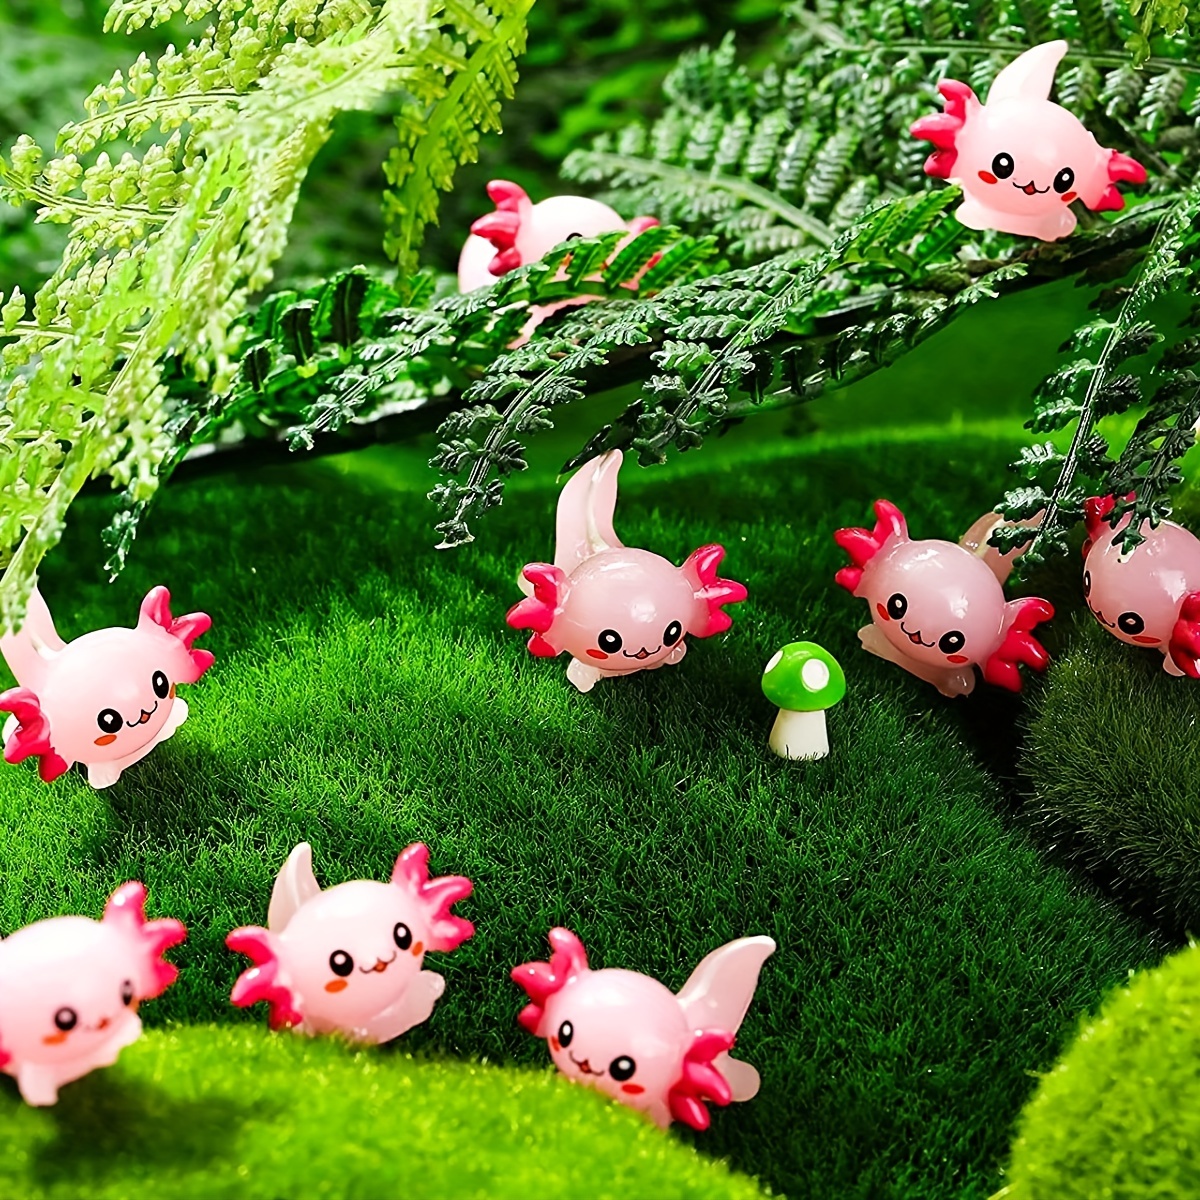  30Pcs Mini Resin Axolotl, Miniature Animal Figurine, Garden  Landscape Aquarium Dollhouse Ornament Potted Plants Decor for DIY Craft  Garden Fairy Decoration Birthday Party Favor : Patio, Lawn & Garden